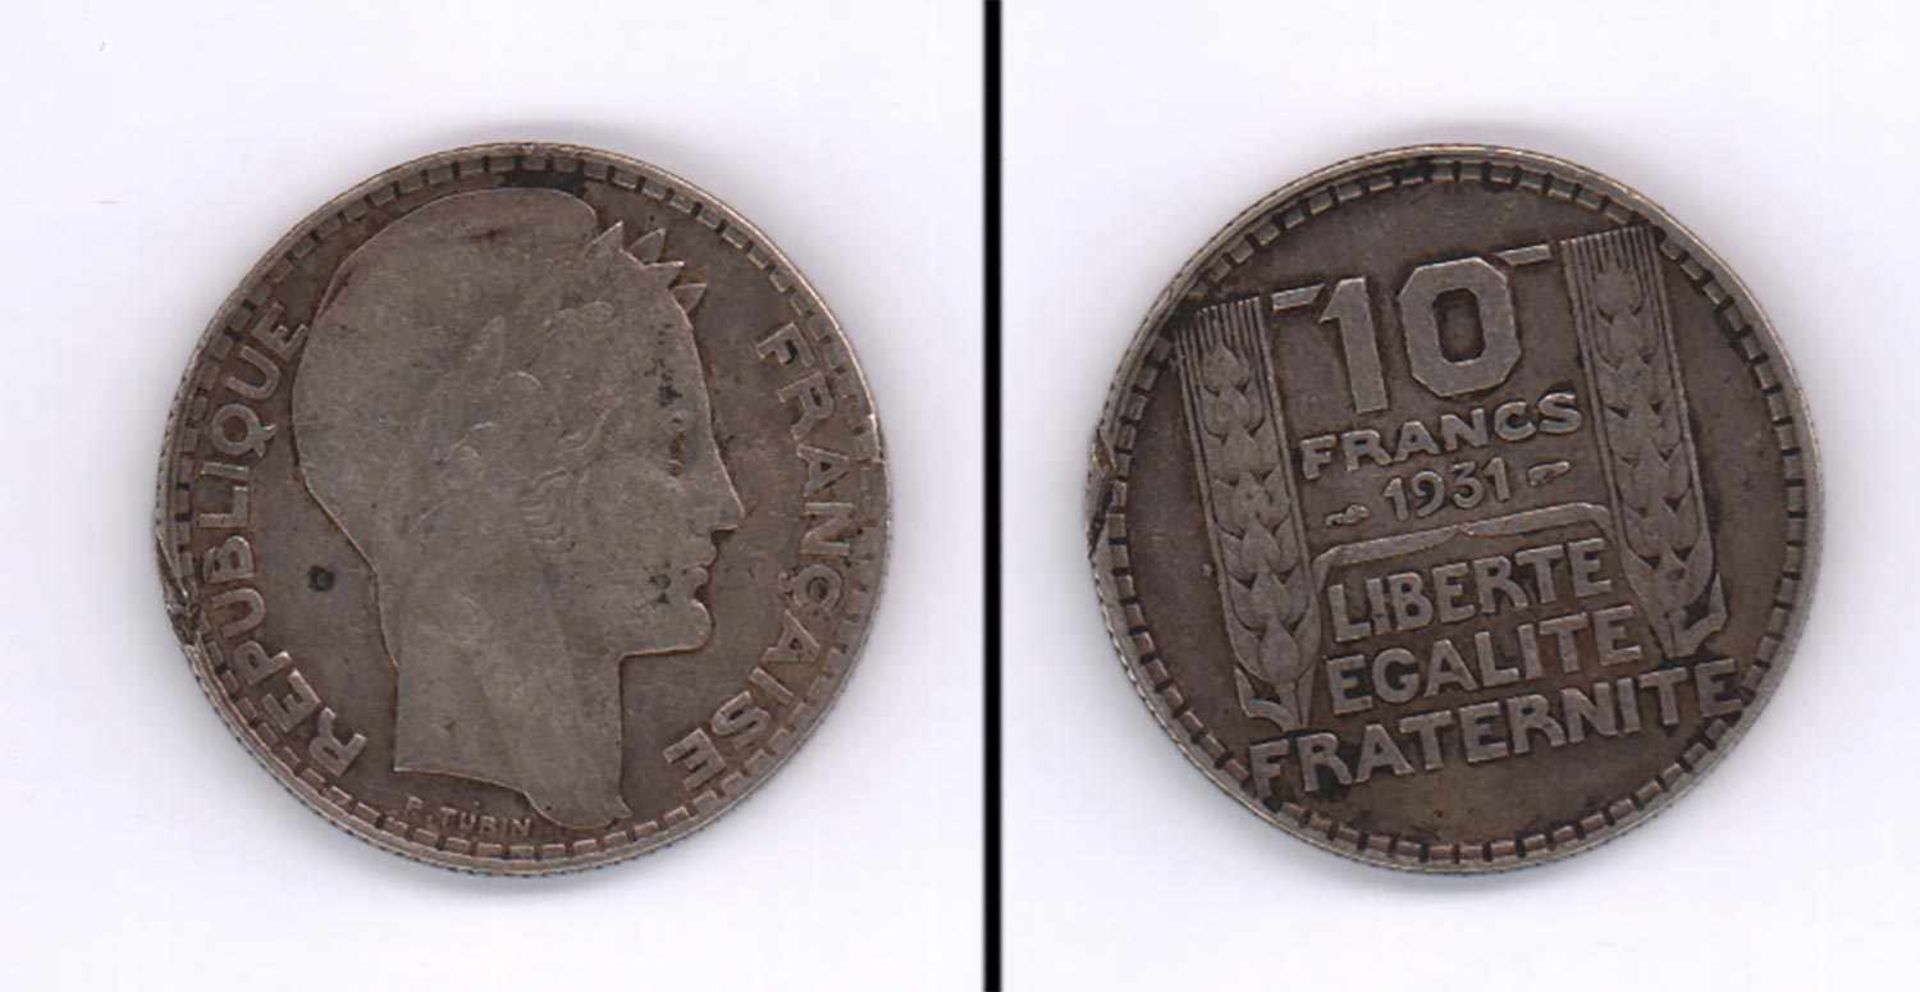 10 France Frankreich 1931, Kopf der Marianne, Silber, ss-vzgl., Schrötlingsbruch